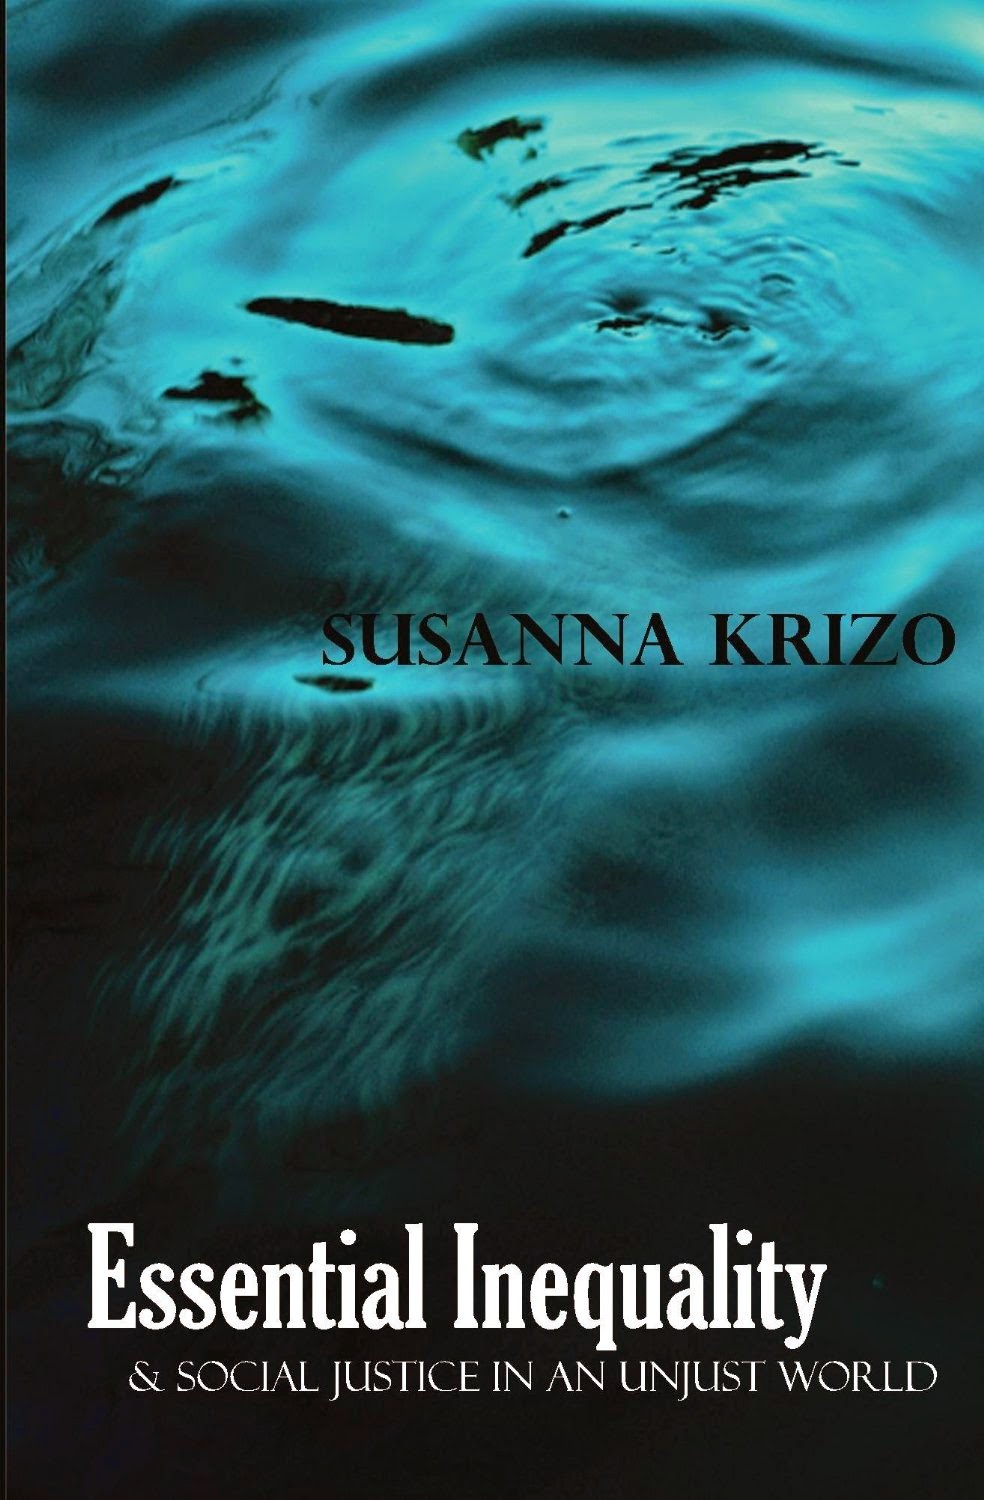 Books by Susanna Krizo